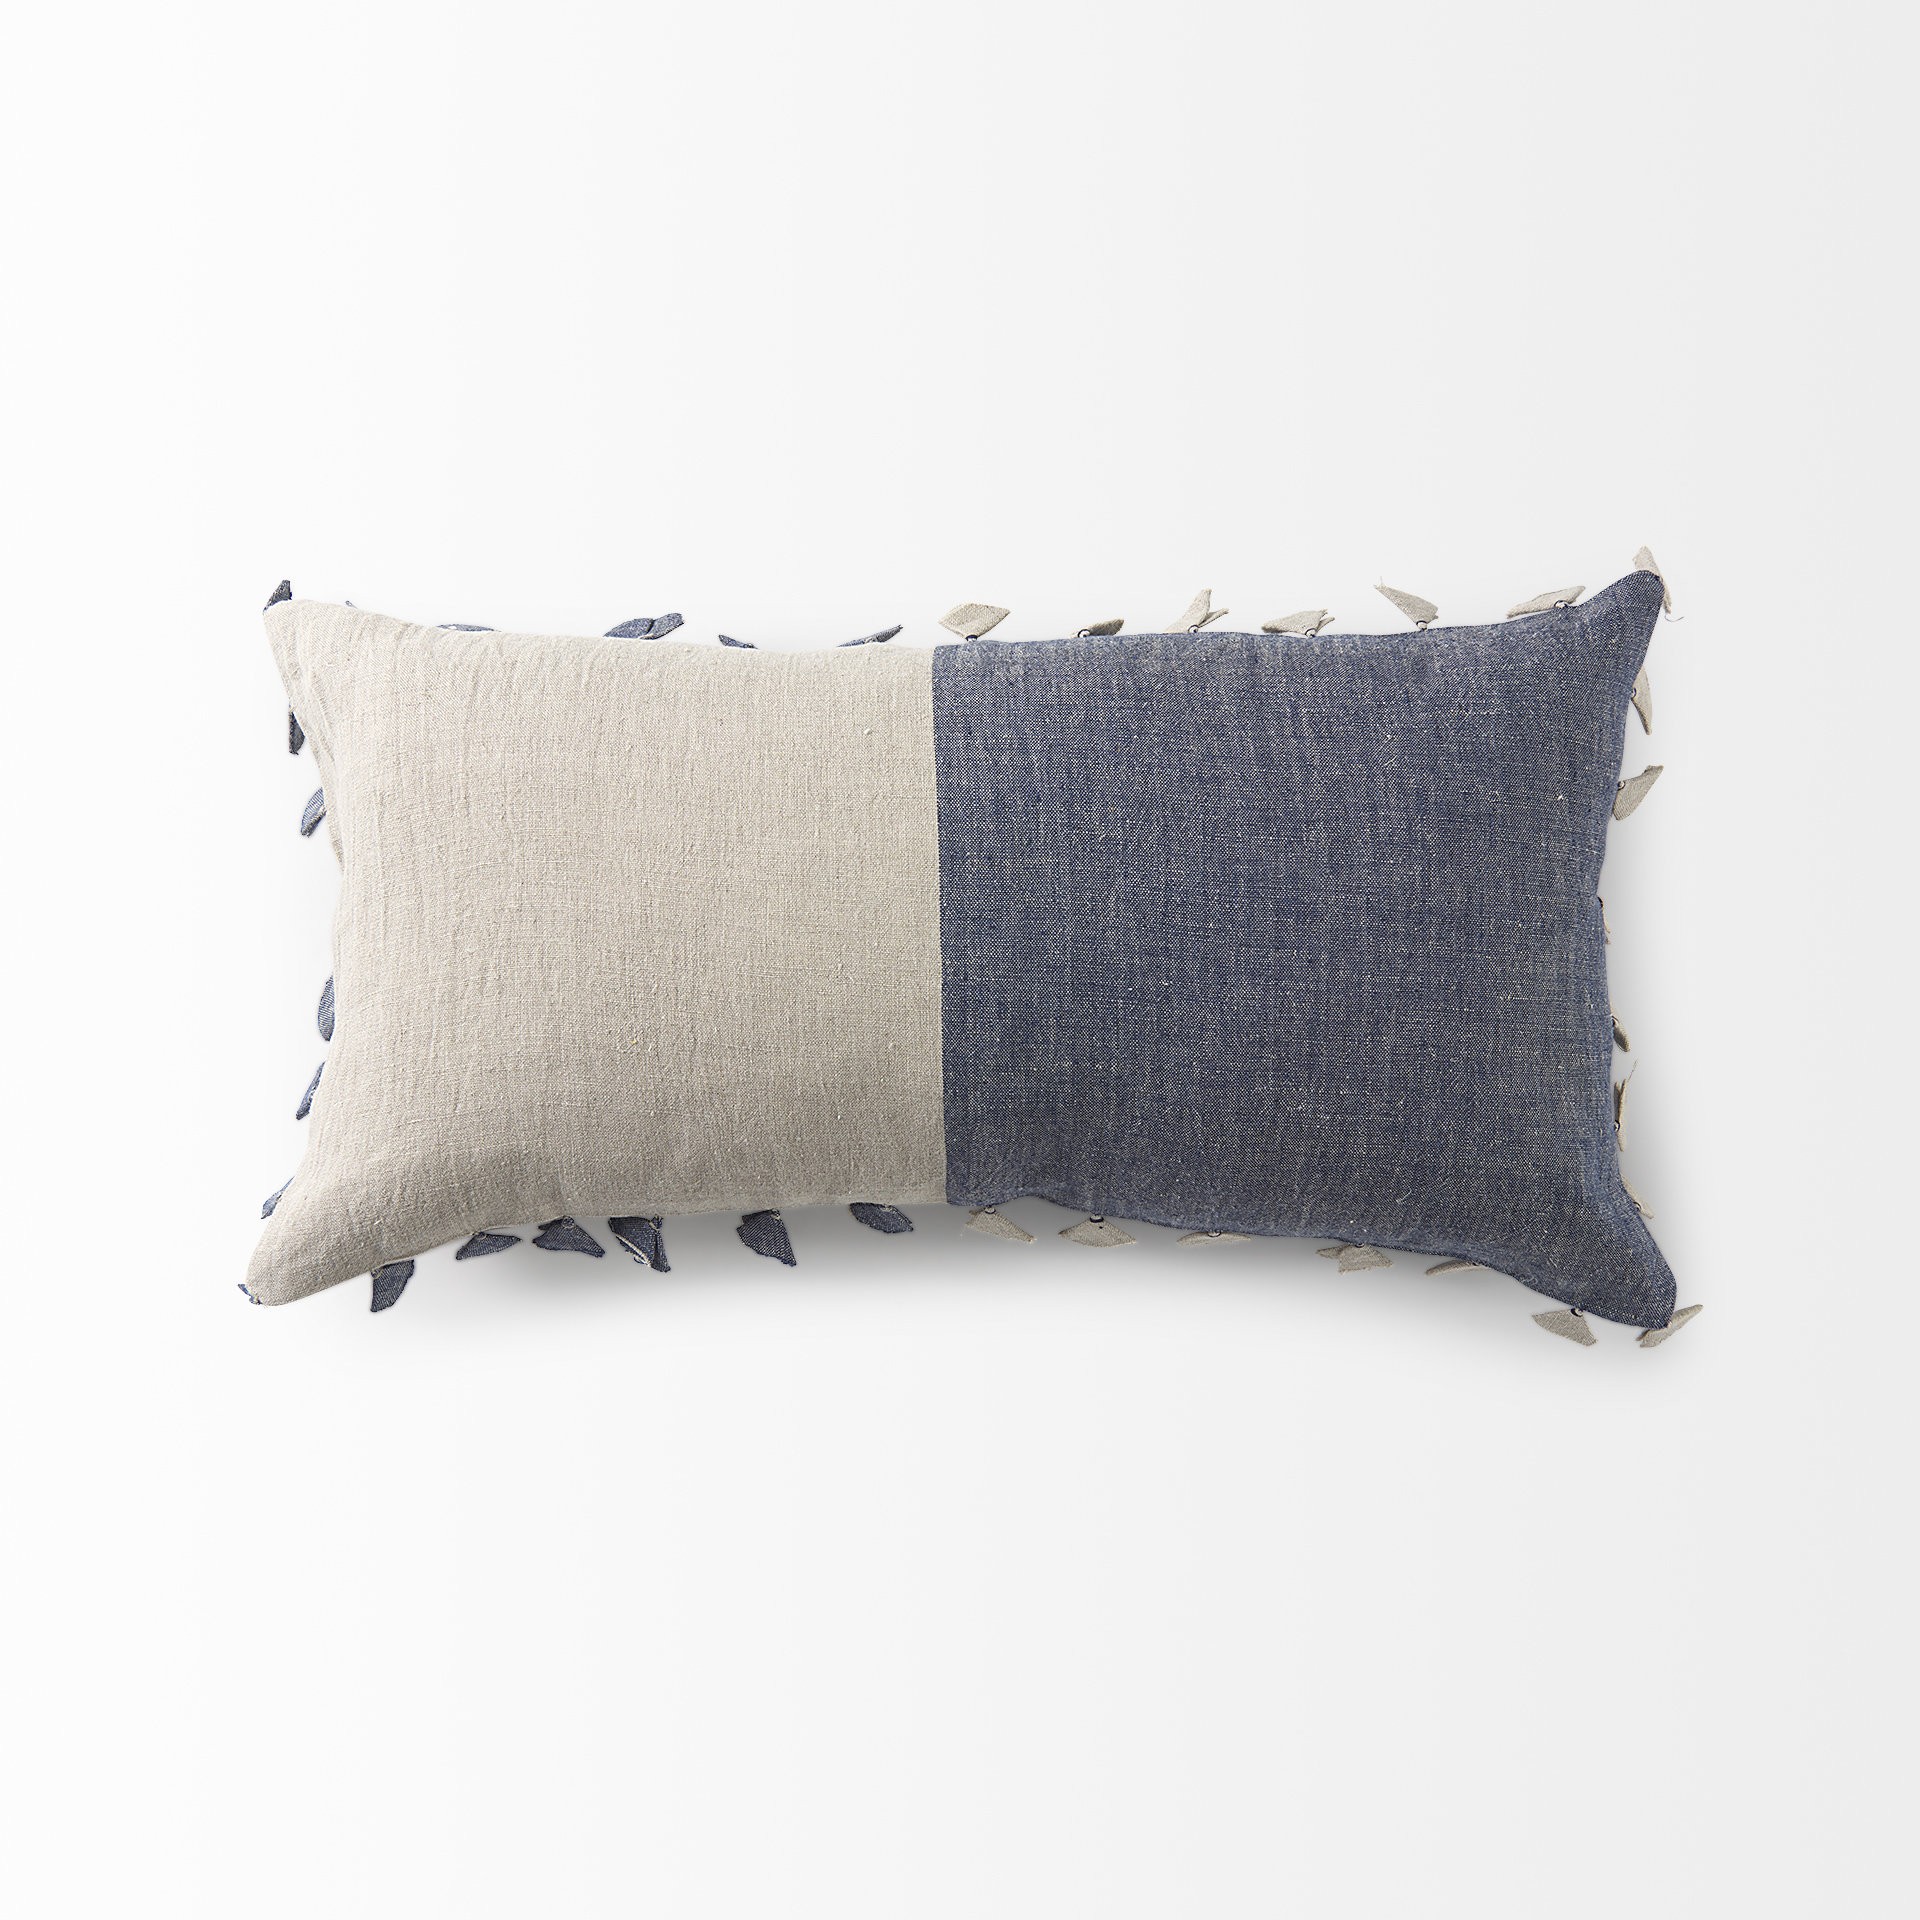 Denim Blue and Canvas Tassle Lumbar Accent Pillow Cover